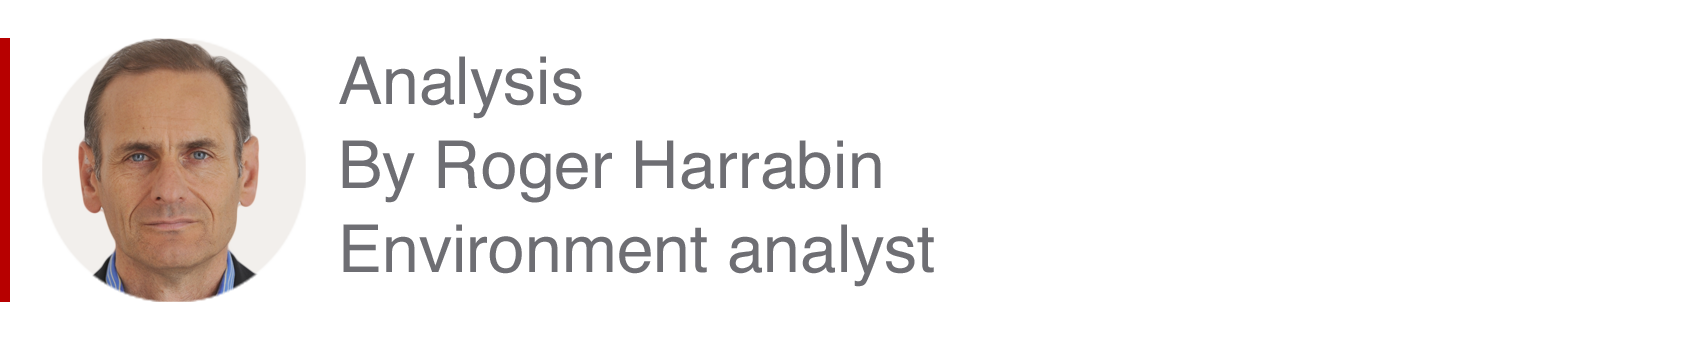 Коробка анализа Роджера Харрабина, аналитика по окружающей среде